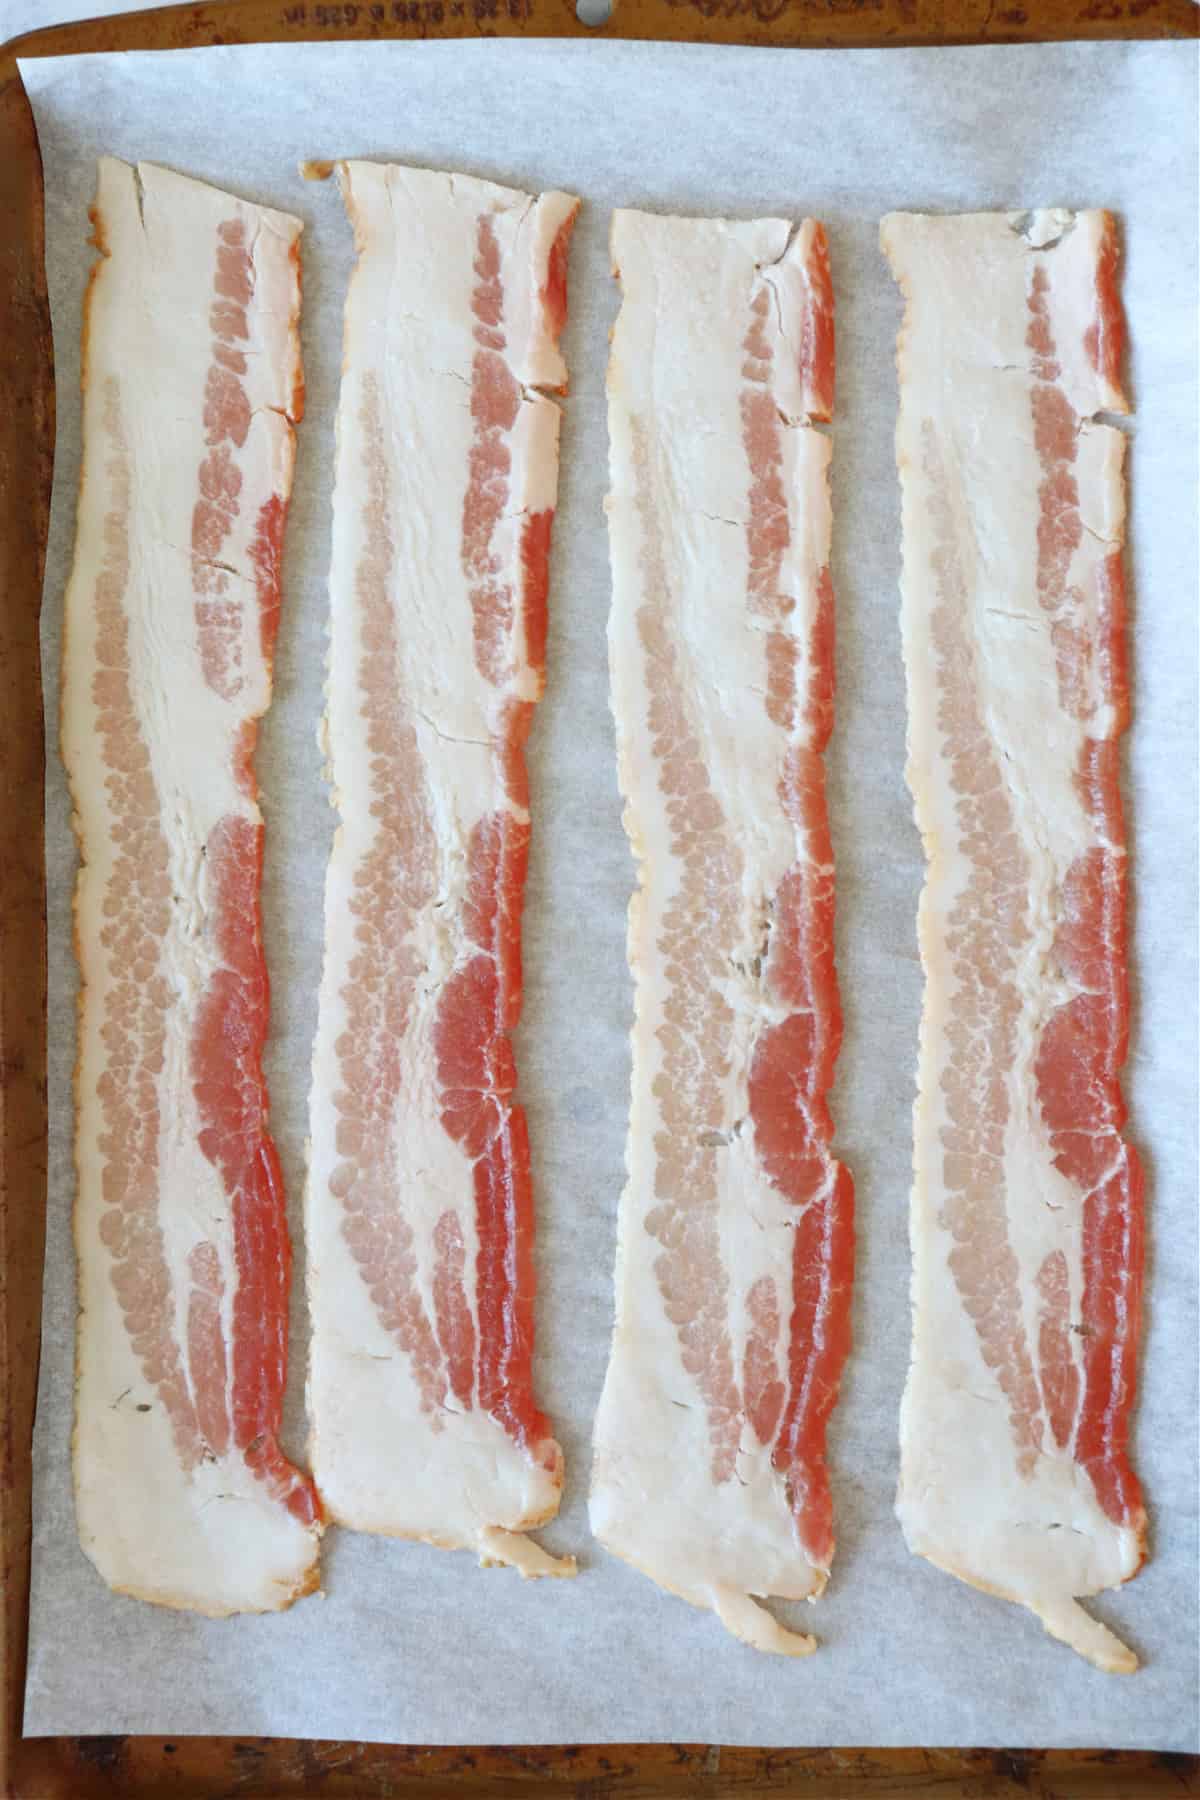 Raw bacon strips on a baking sheet.